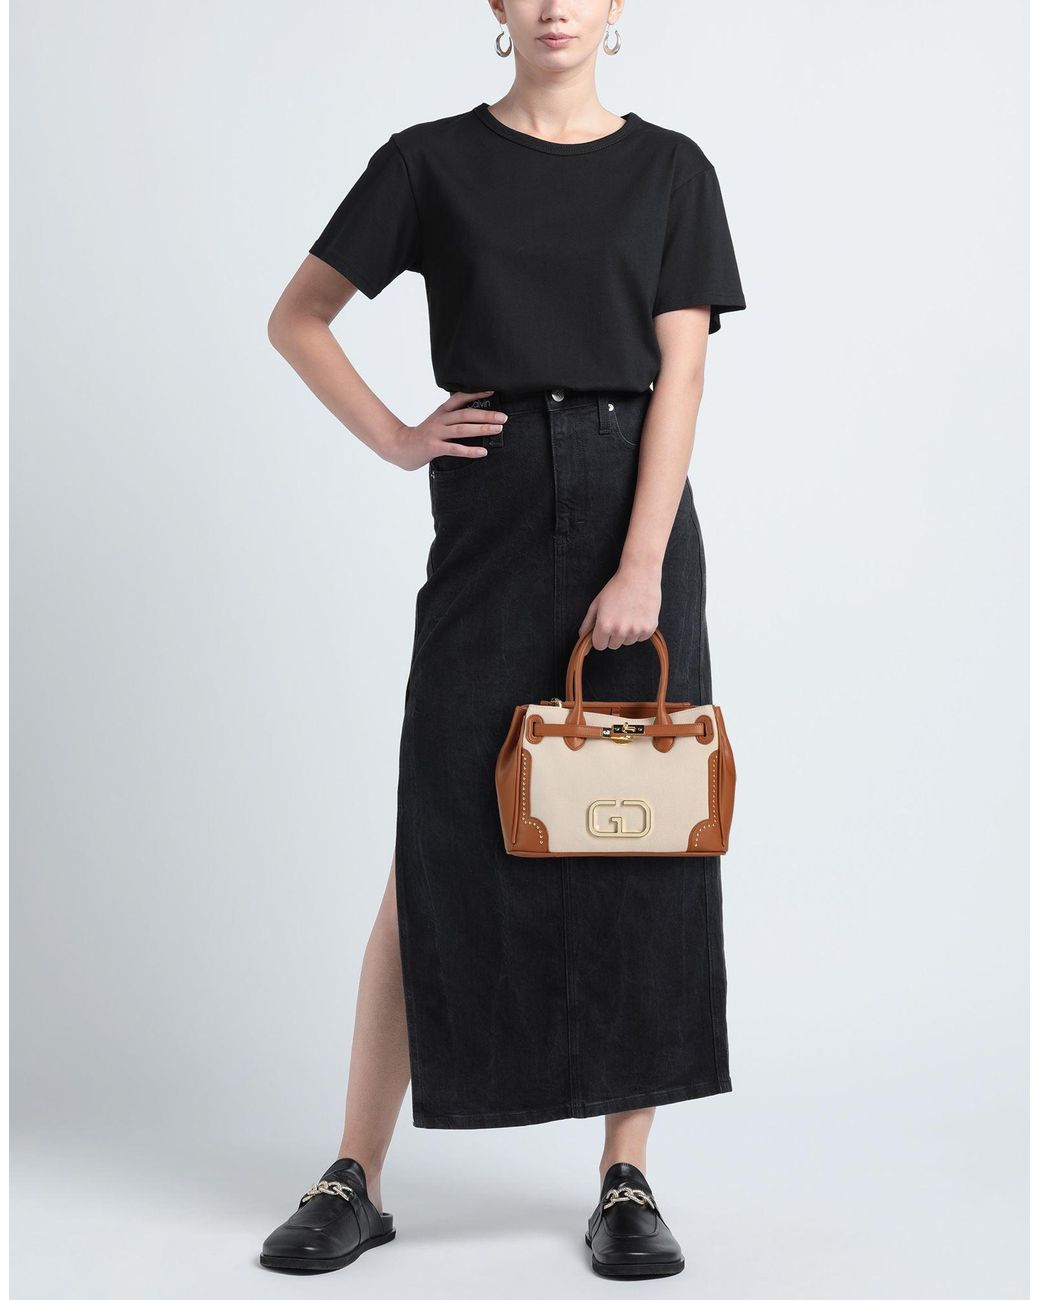 Gio Cellini Milano Shoulder Bag in Black | Lyst Australia